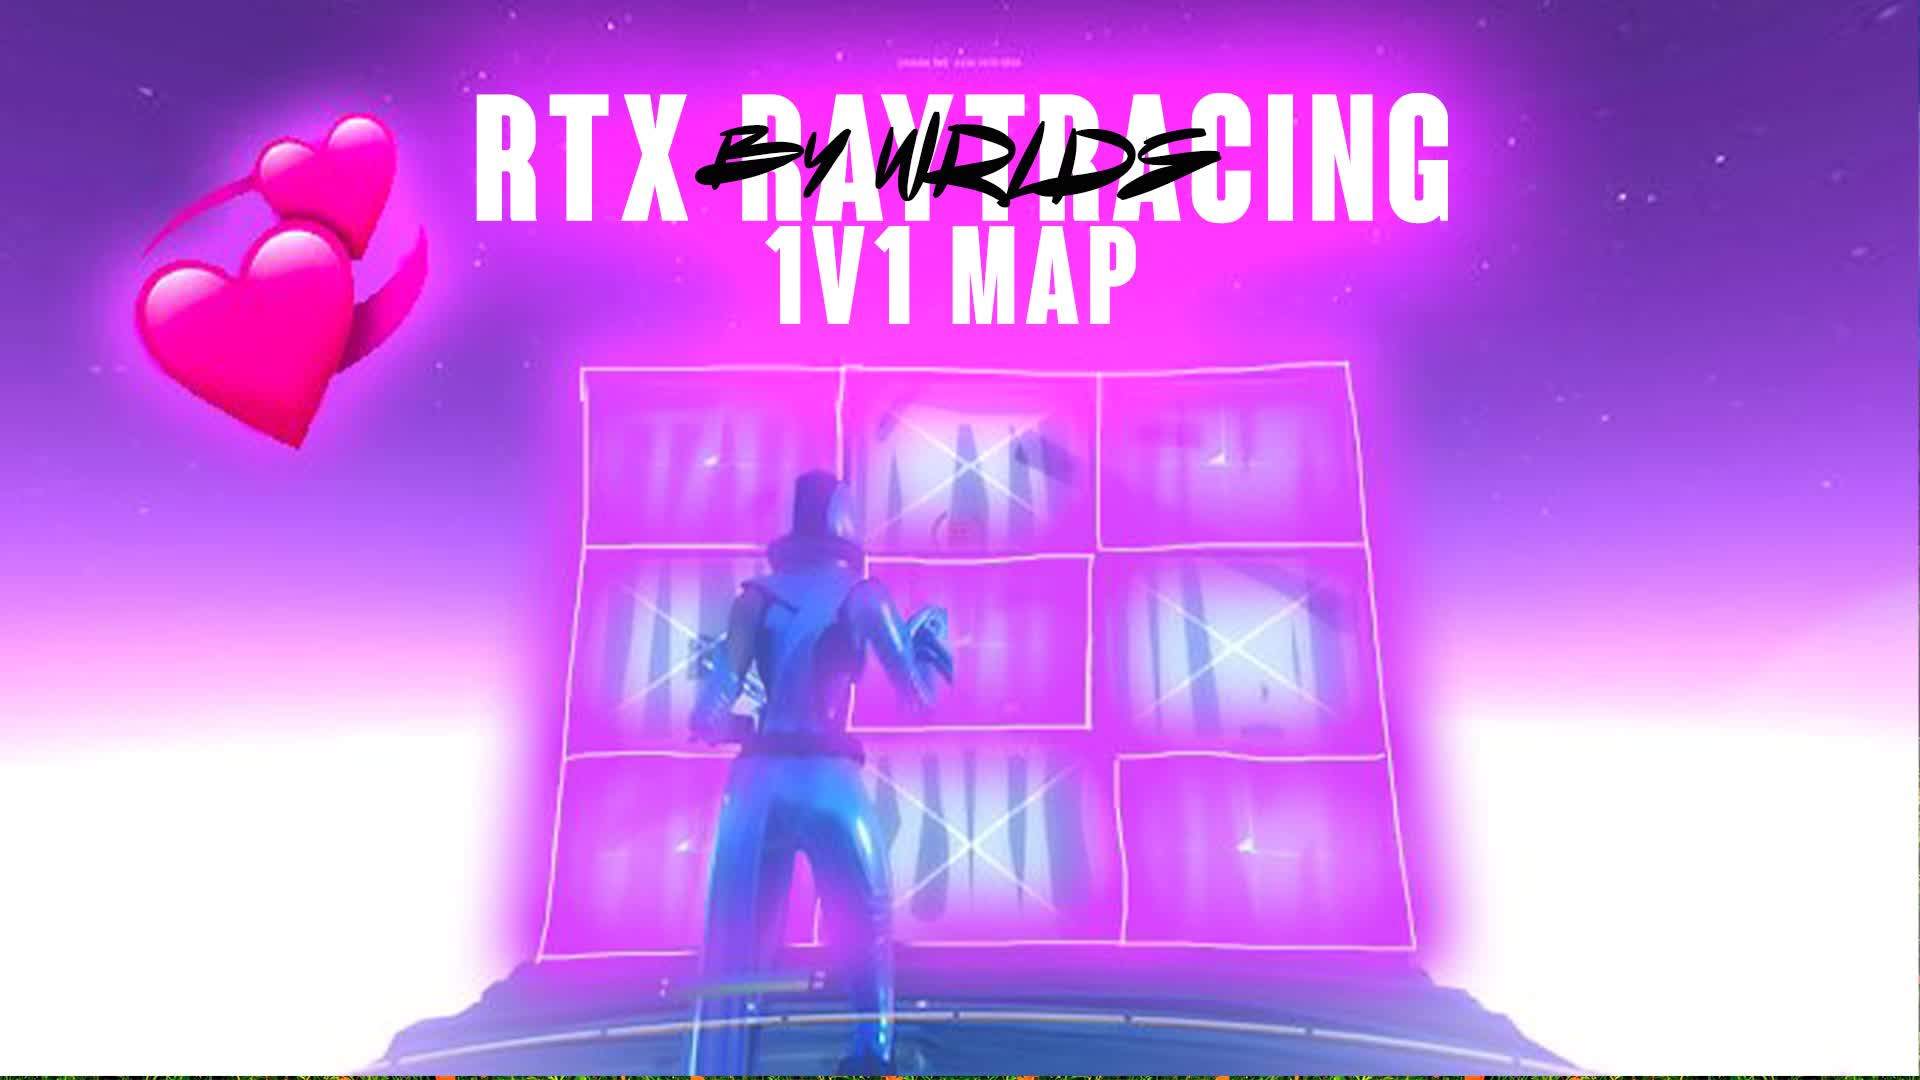 WRLDS RTX RAYTRACING 1V1 MAP